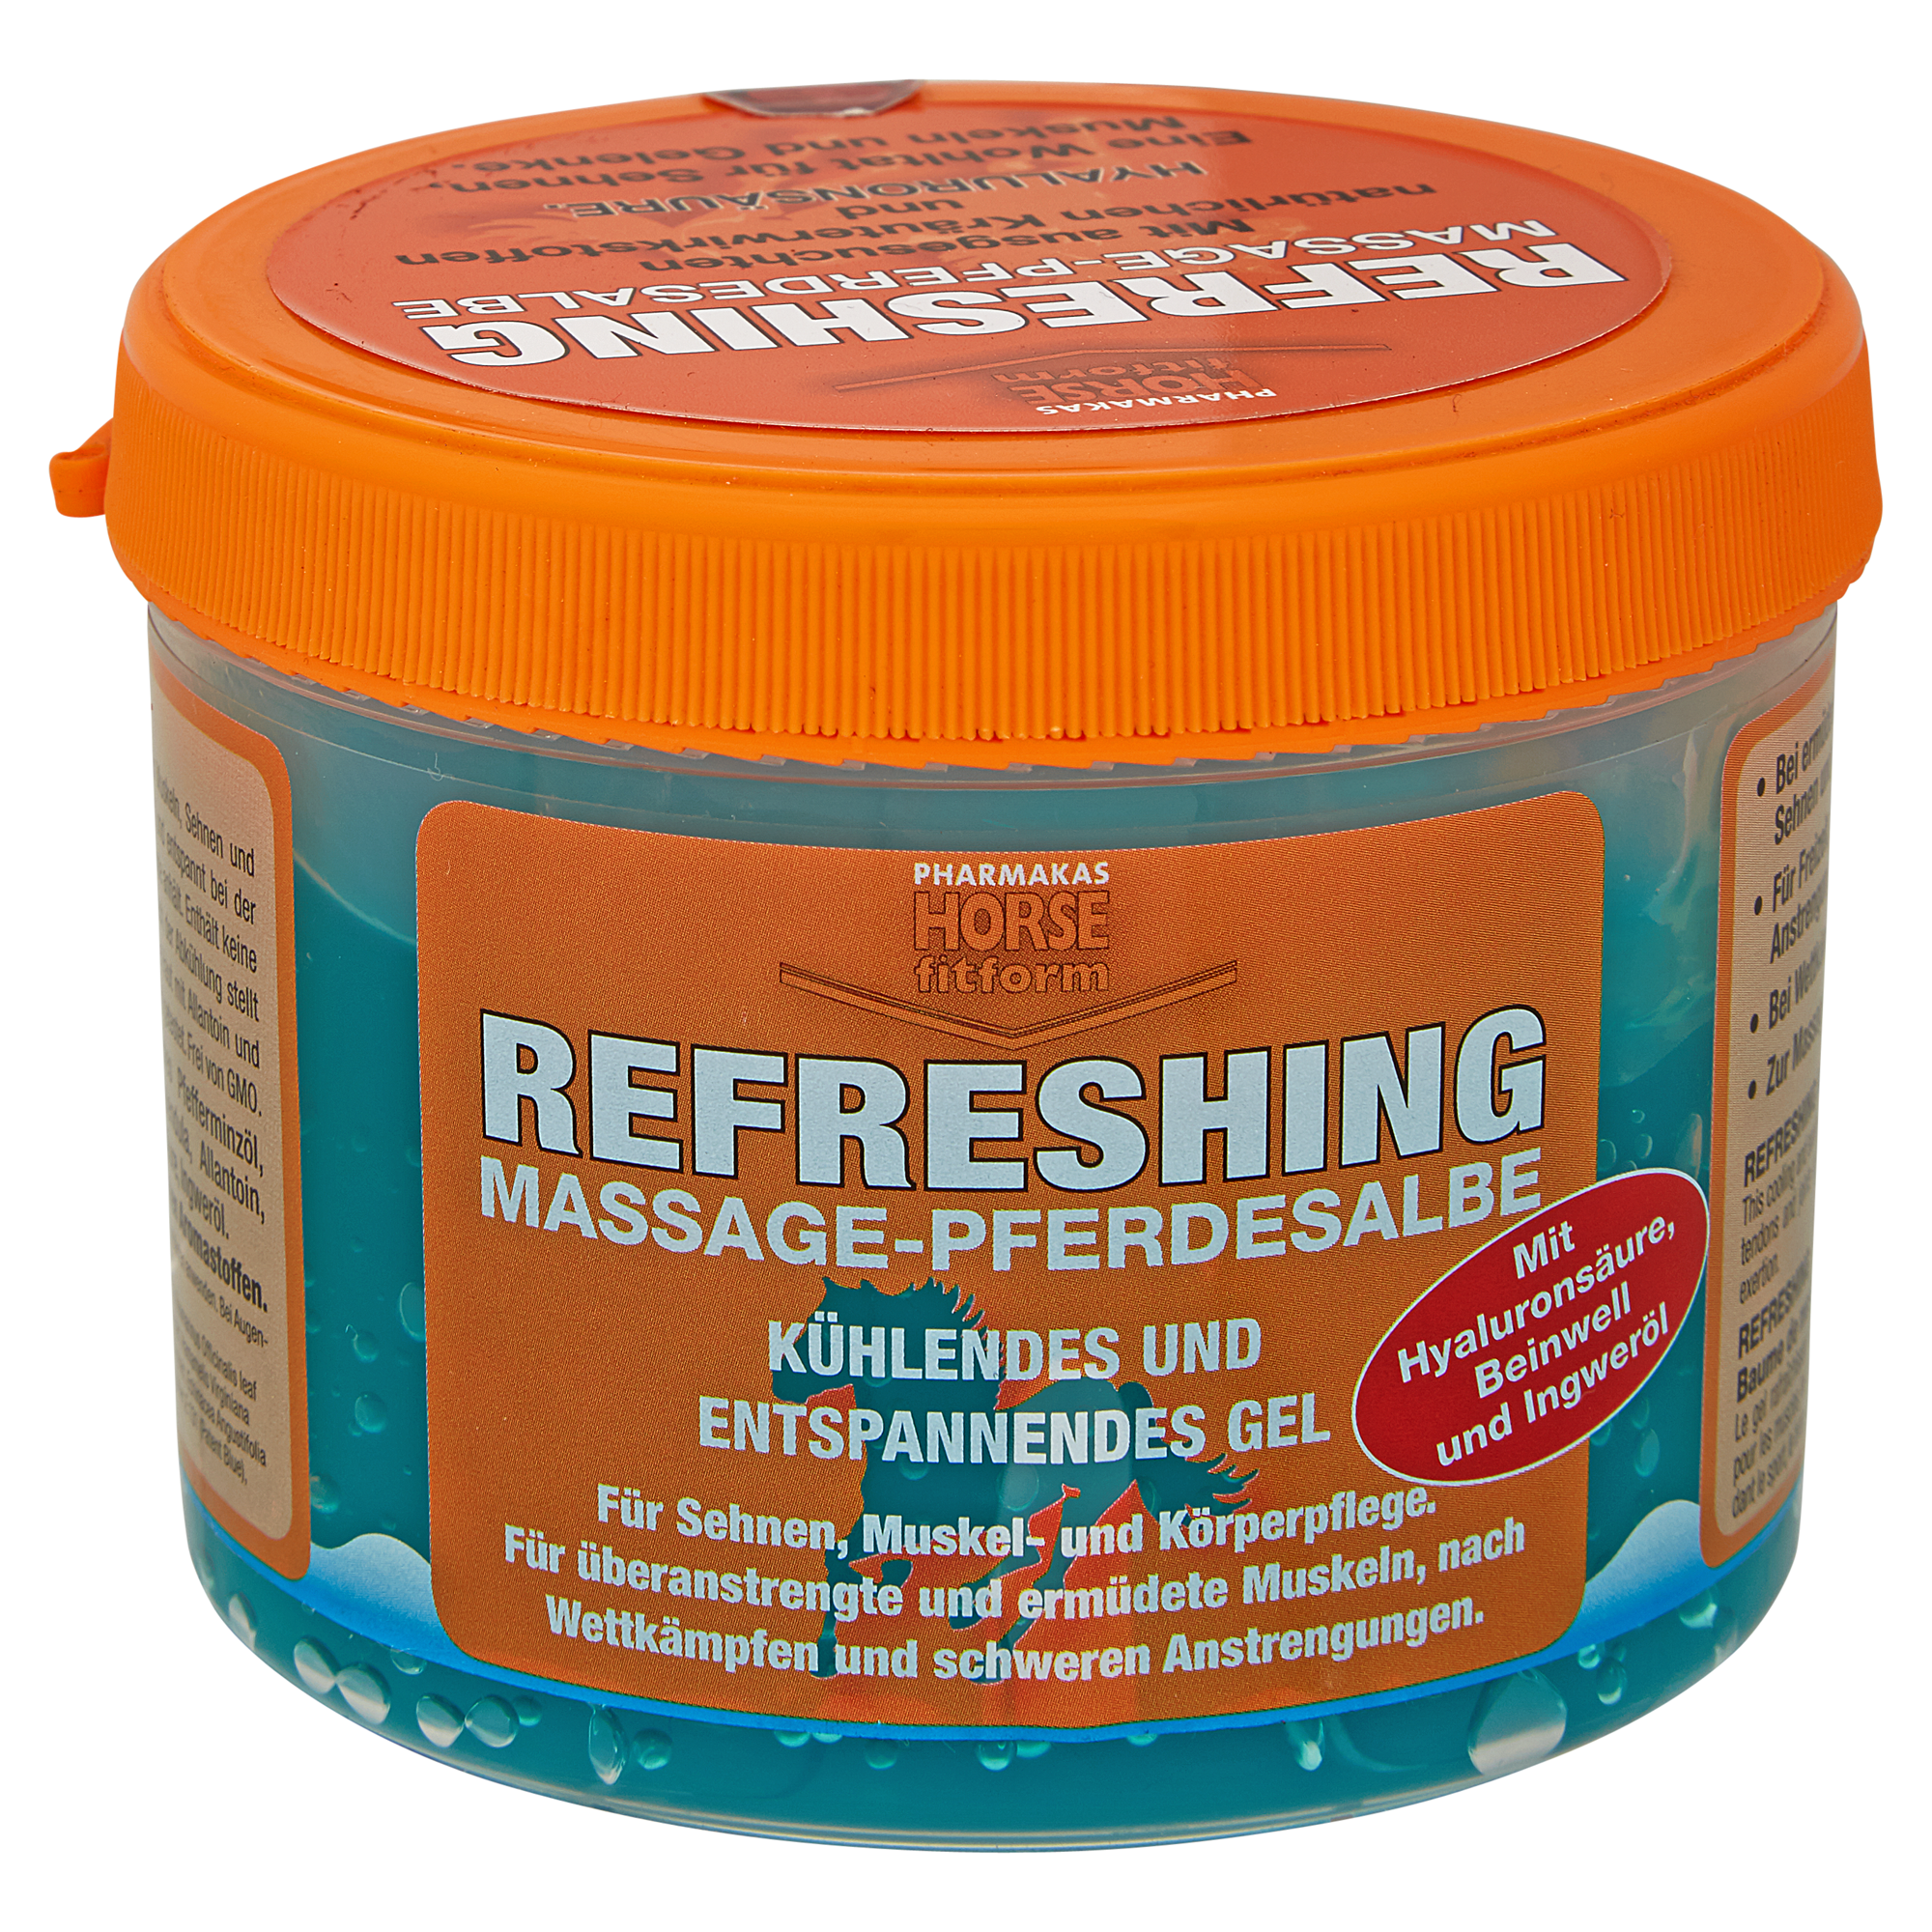 Massage-Pferdesalbe 500 ml + product picture